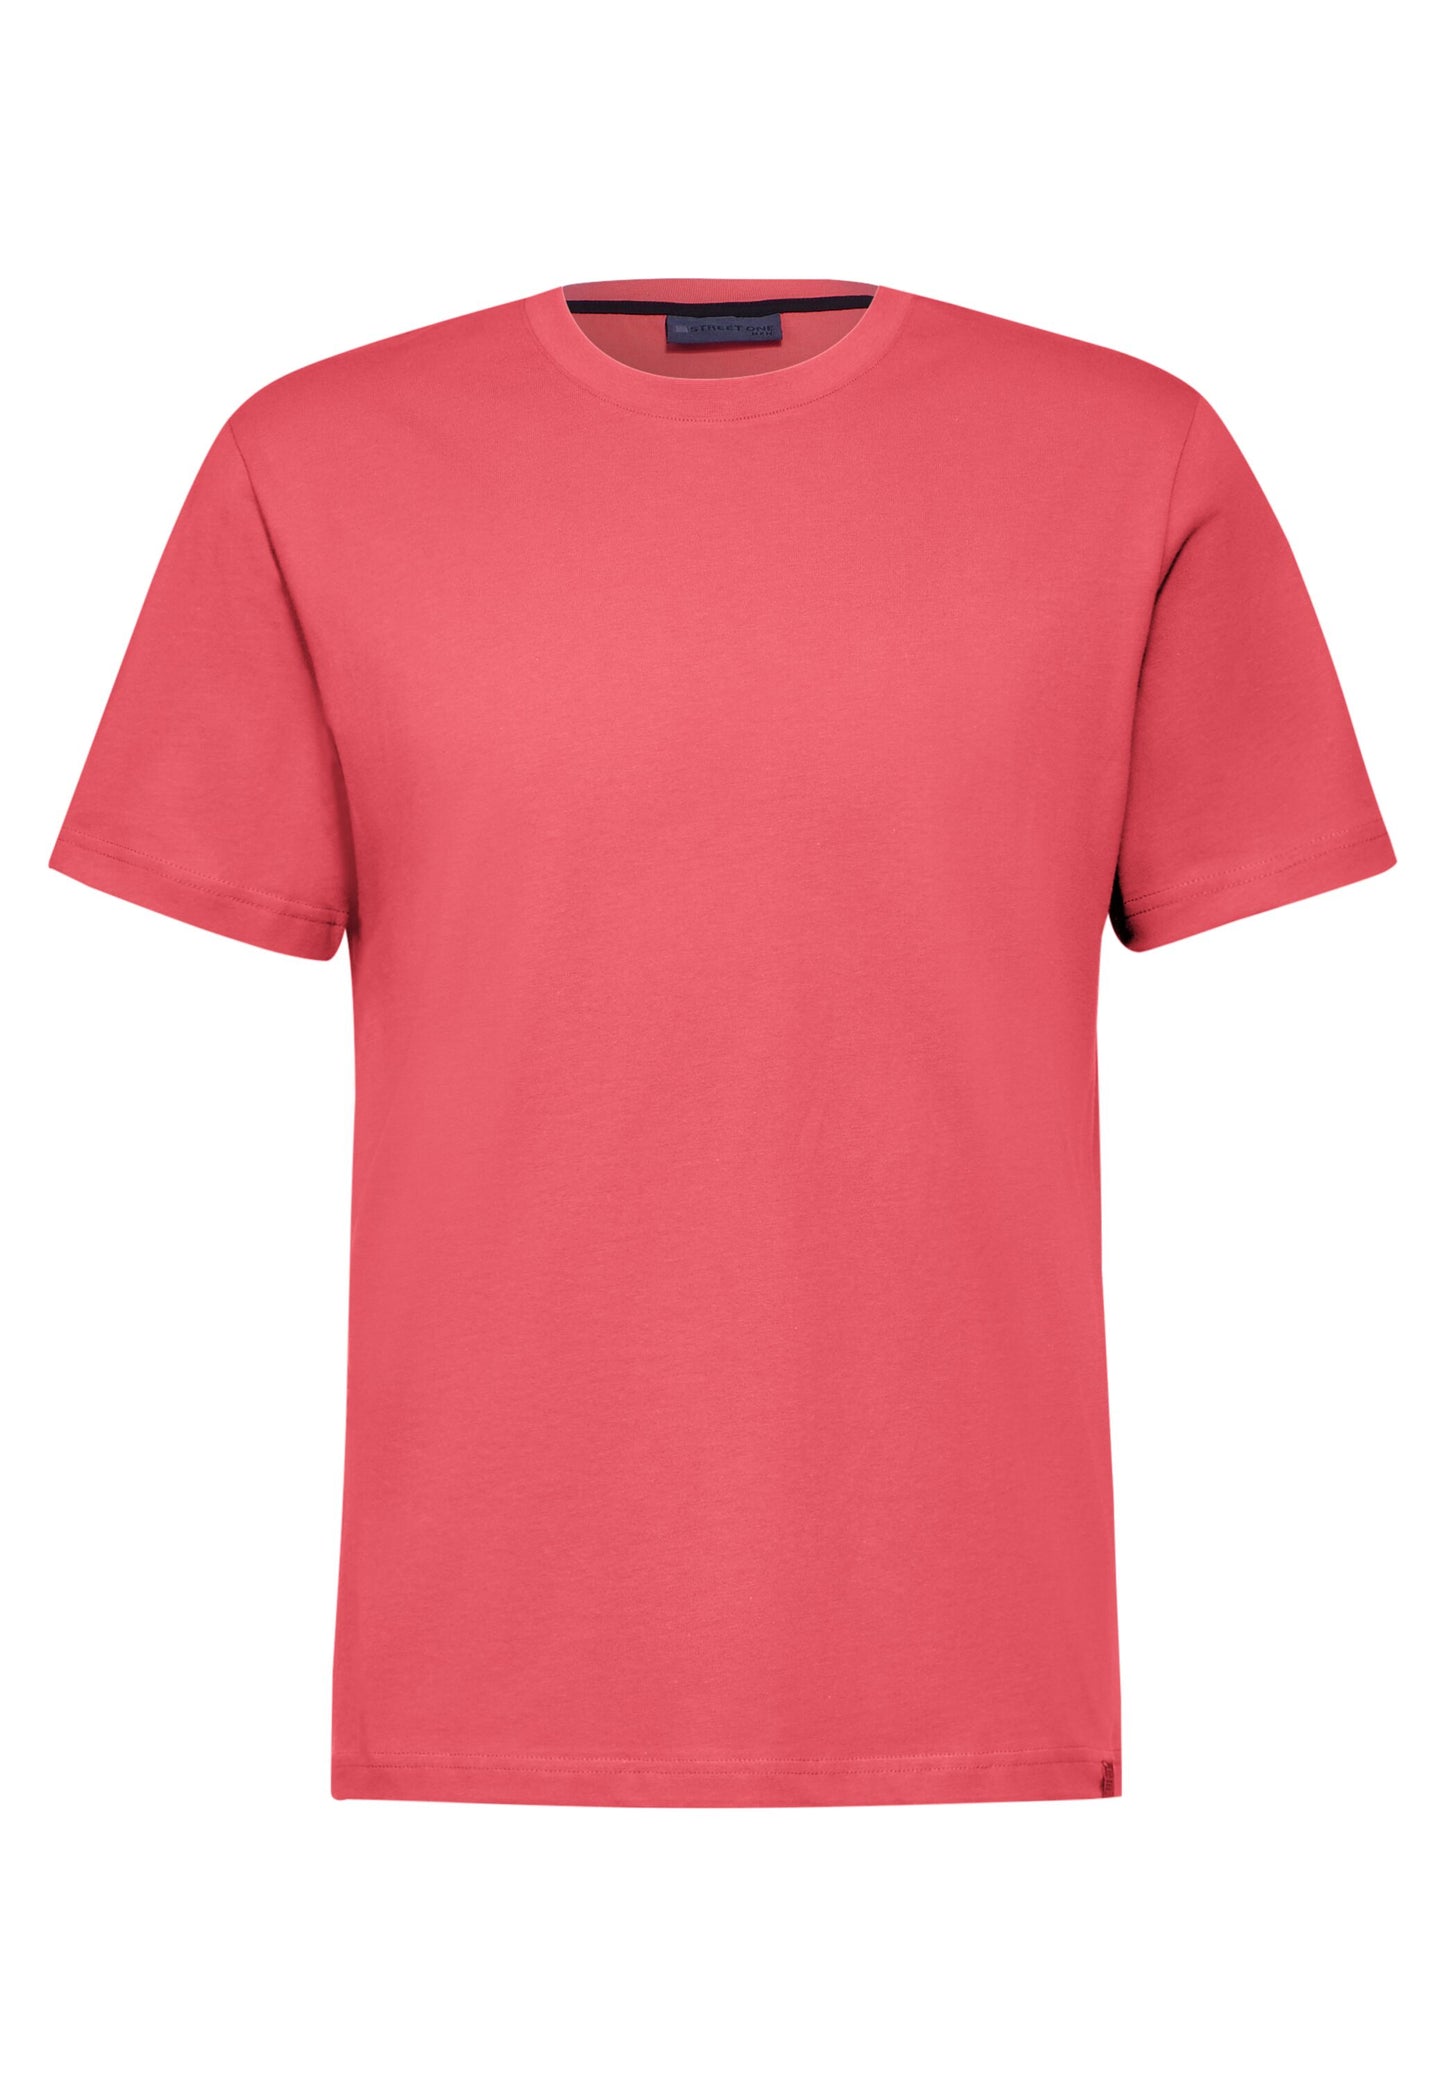 Street One MEN - Herren Basic T-Shirt in Unifarbe - Crab Red